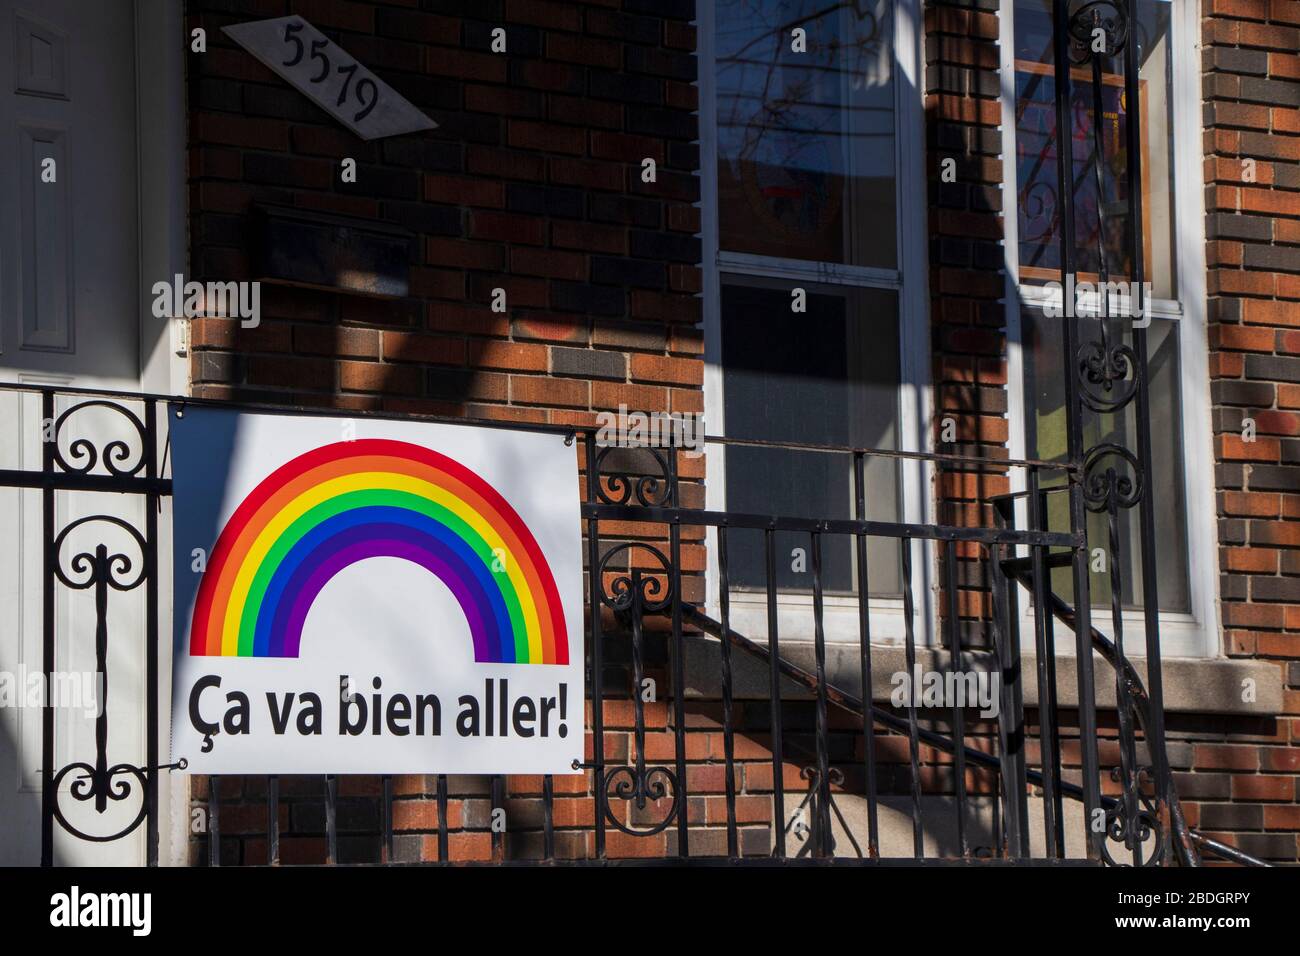 April 2020 - Montreal, QC, Kanada: Regenbogenschild vor einem Haus, "Ca va bien aller" französische Hope Message Movement, Coronavirus (COVID-19) Pandemie Stockfoto